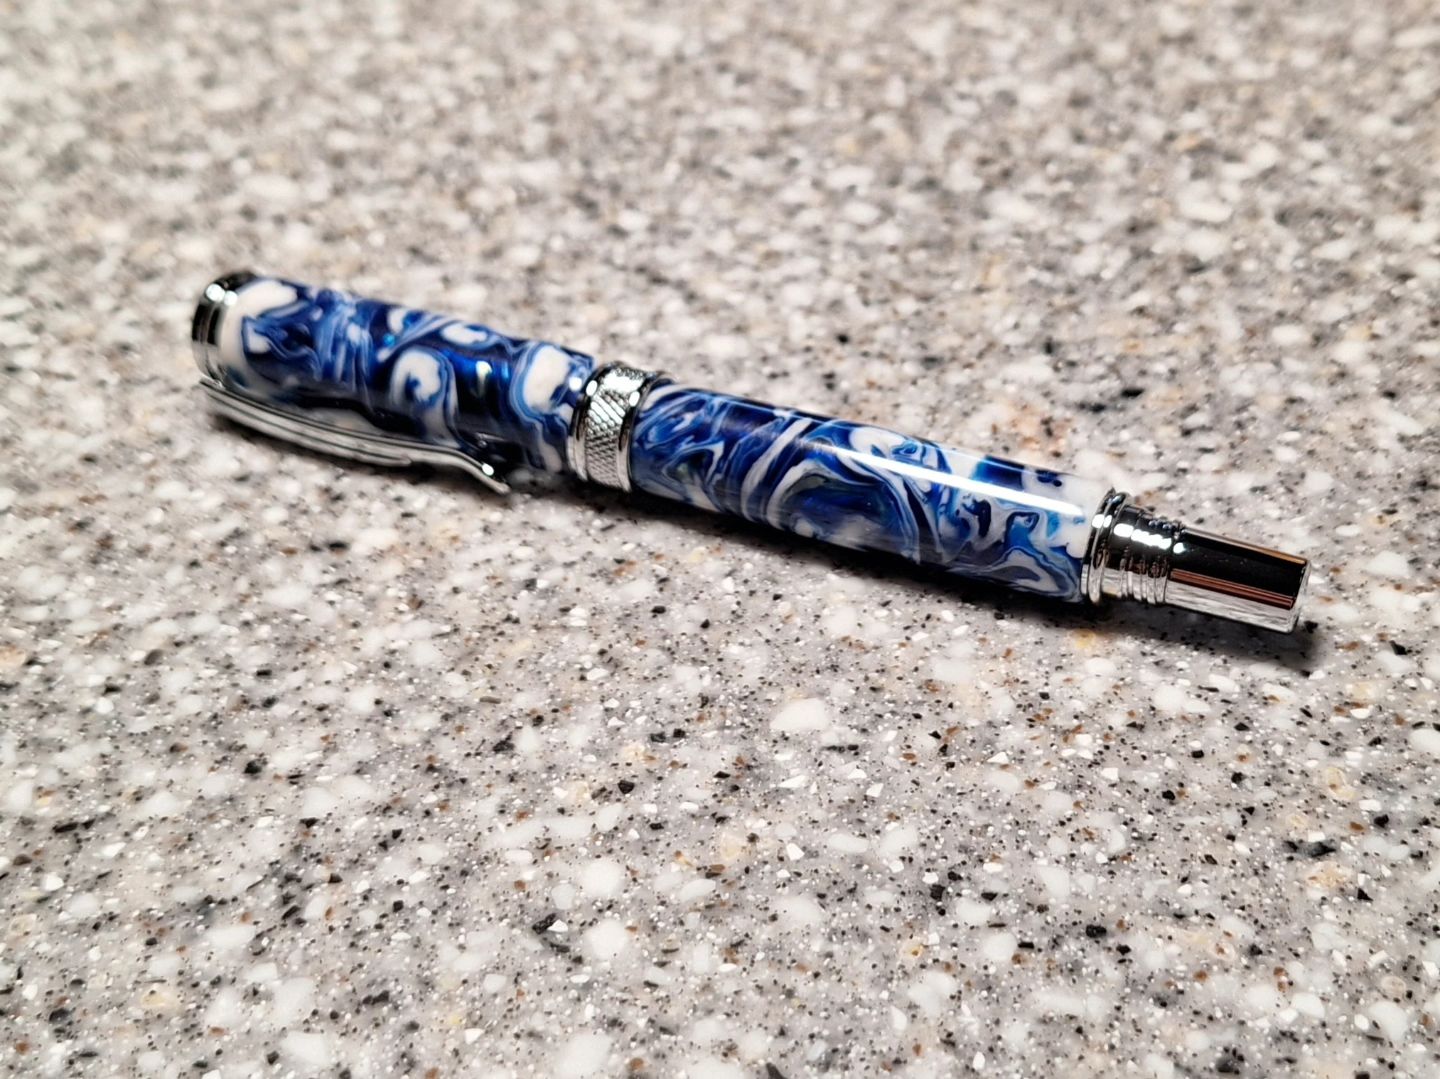 A jr harold pen and a sierra click pen #penmaking #pen # pens #lathe